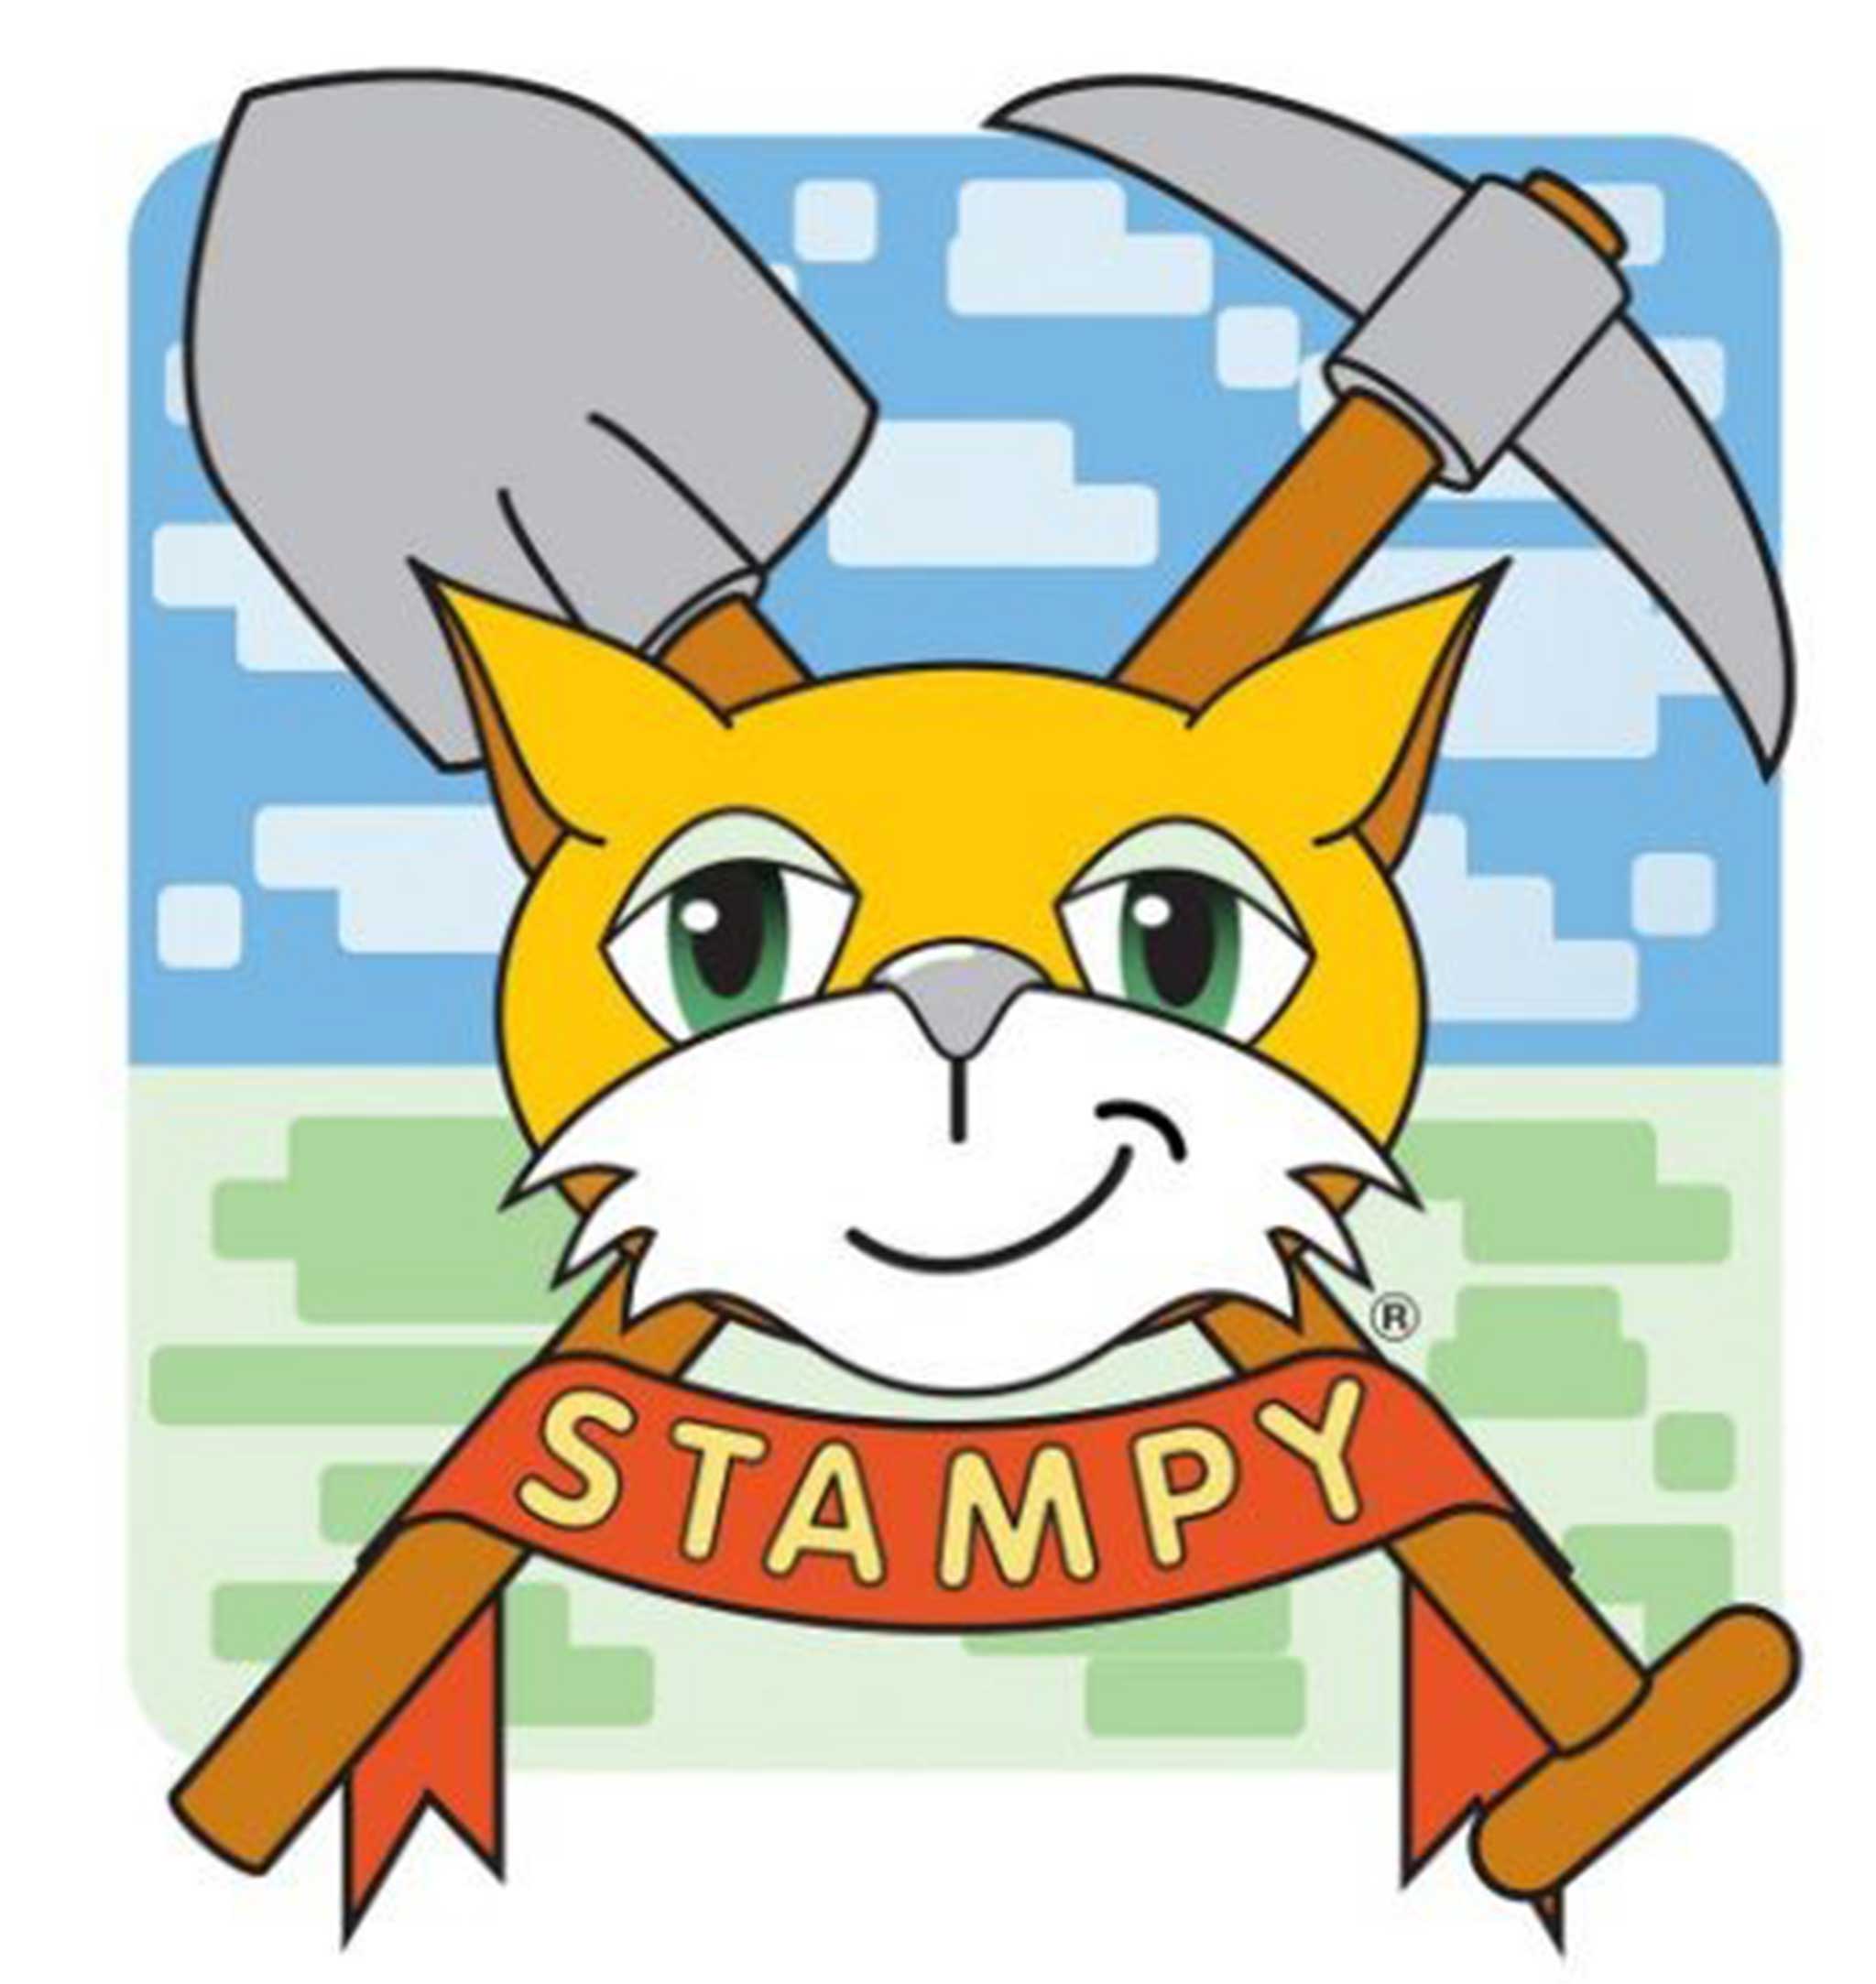 Download Stampy Cat: Joseph Garrett's cartoon from Minecraft that ...